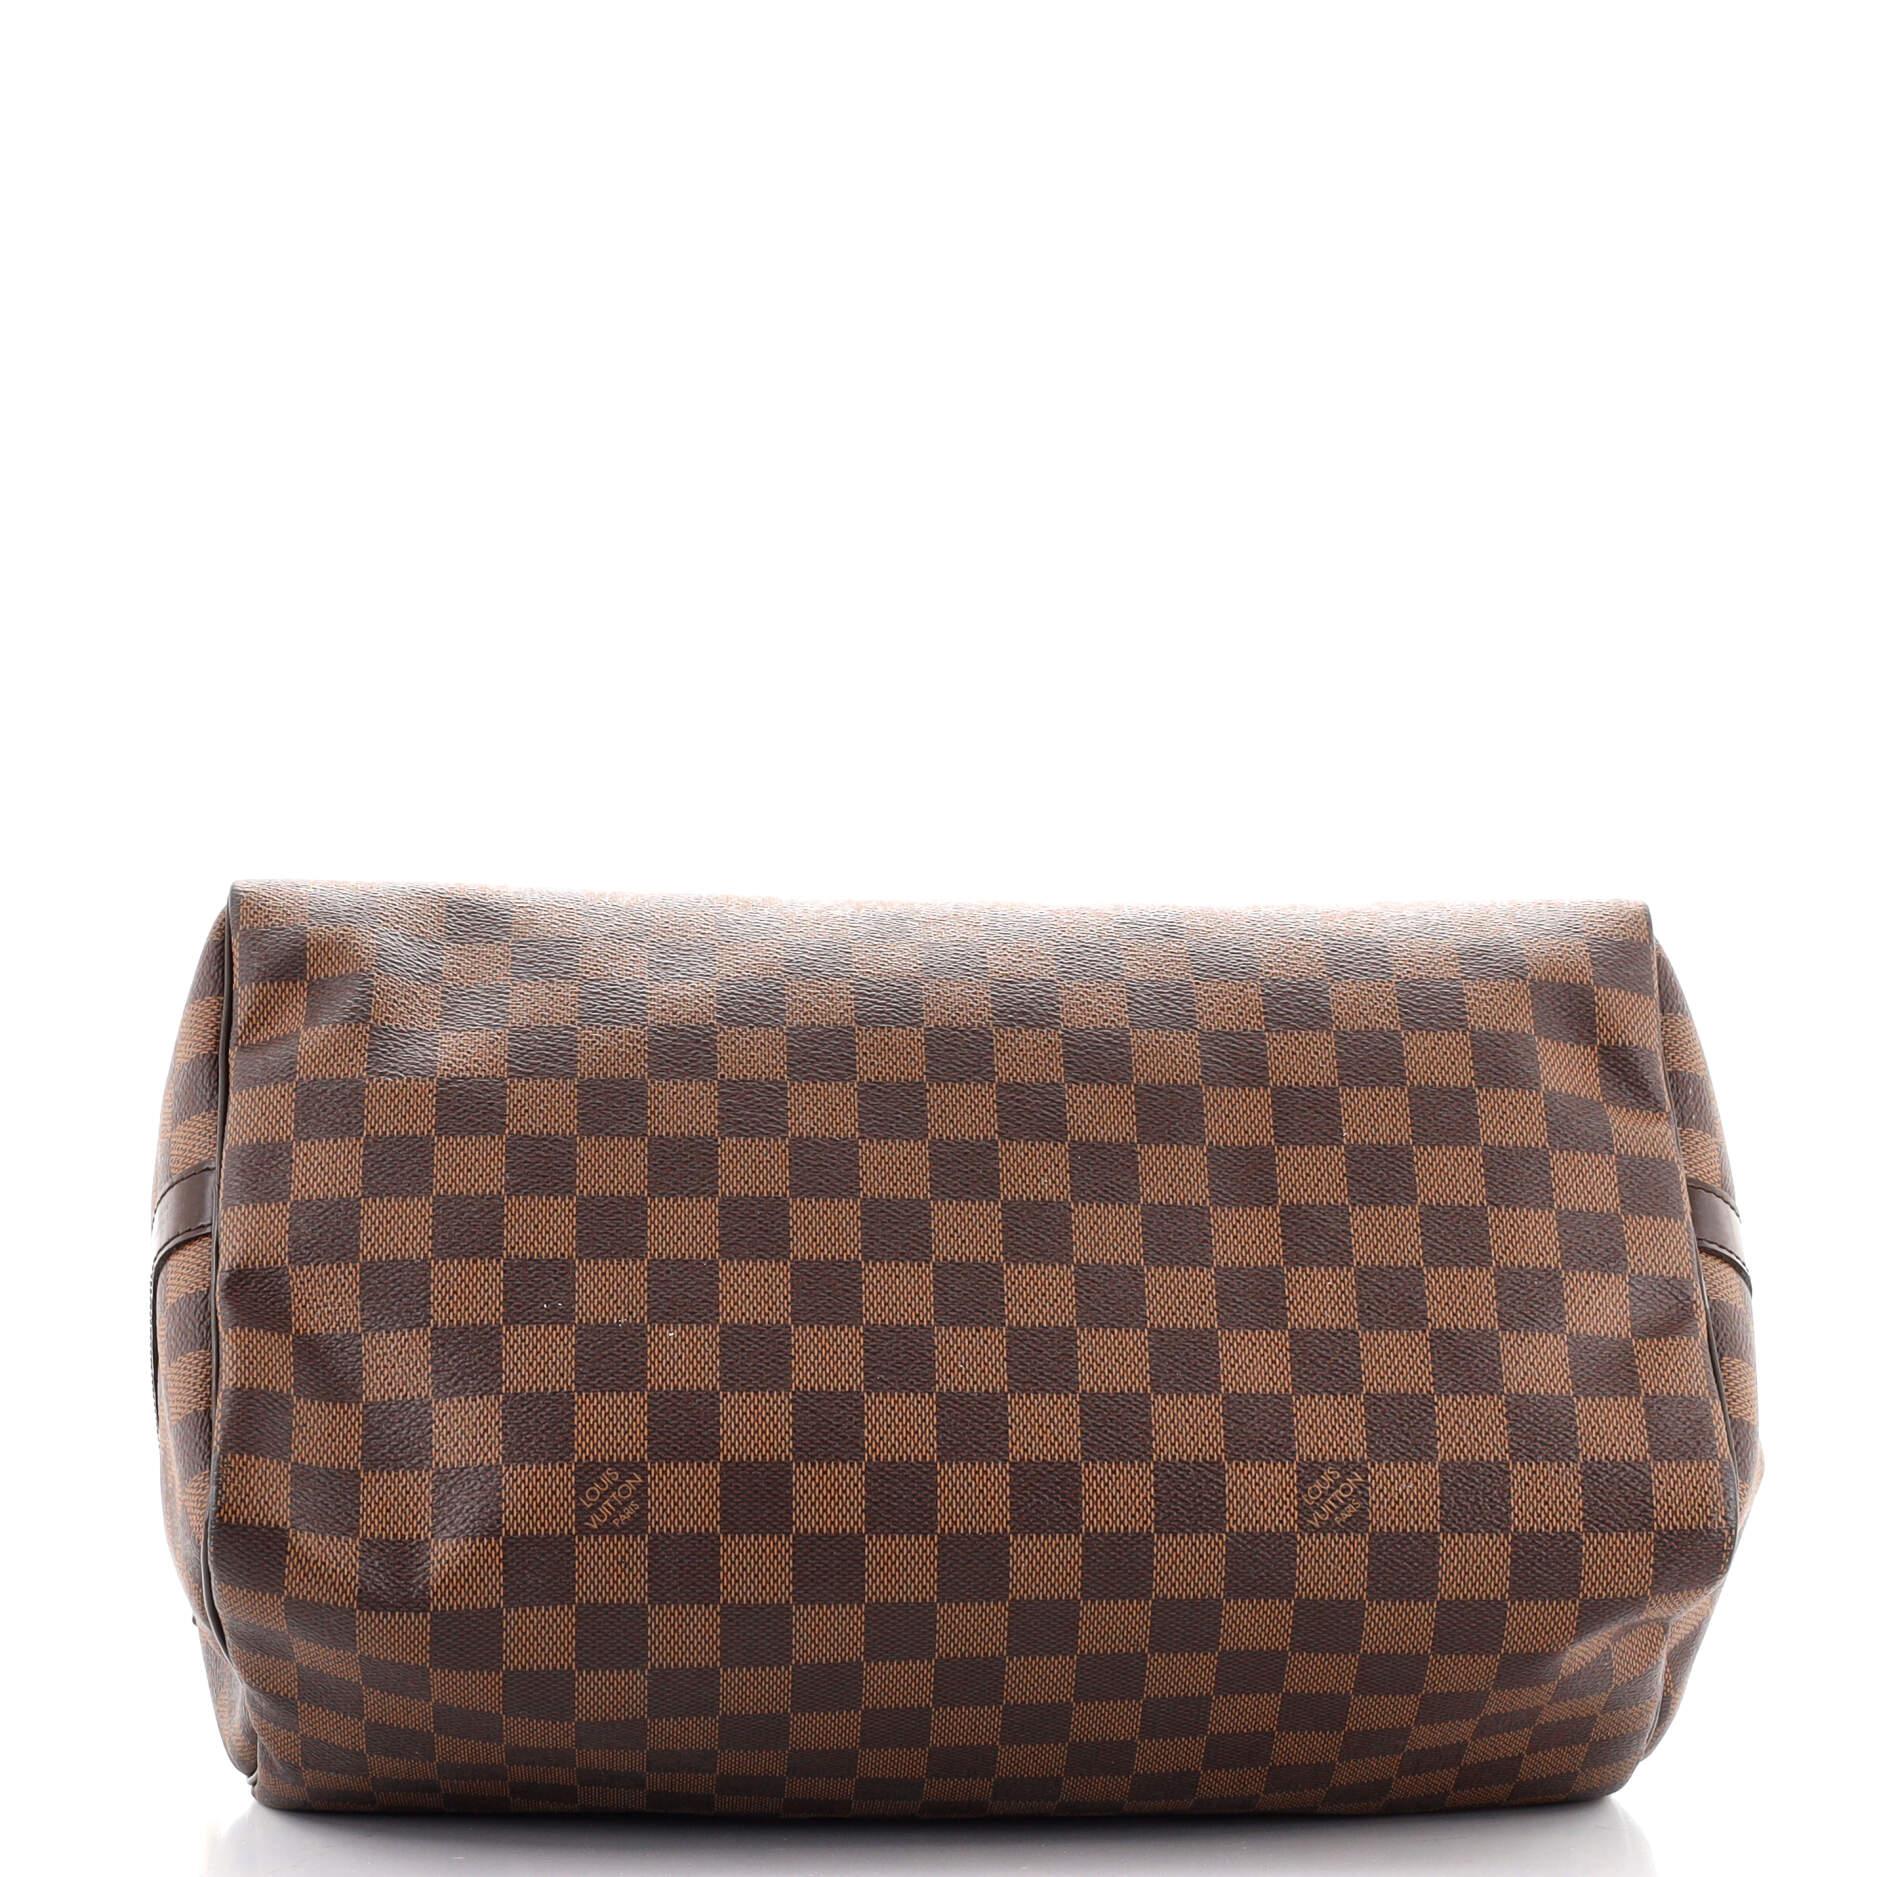 Women's or Men's  Louis Vuitton Speedy Bandouliere Bag Damier 35